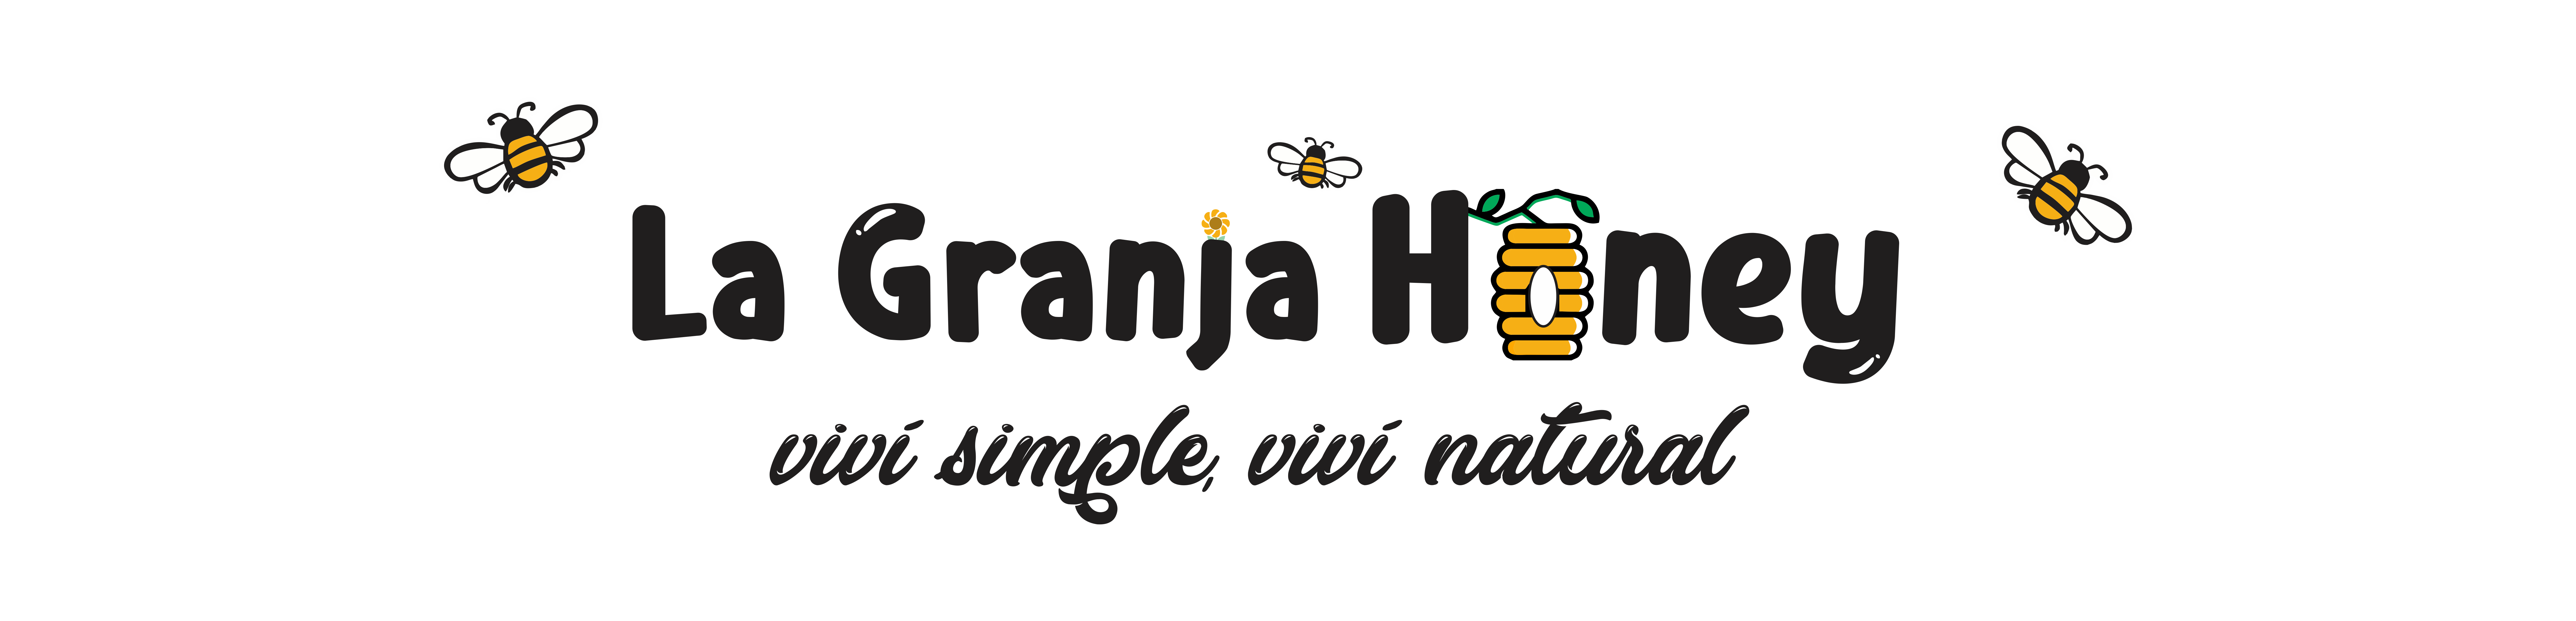 La Granja Honey